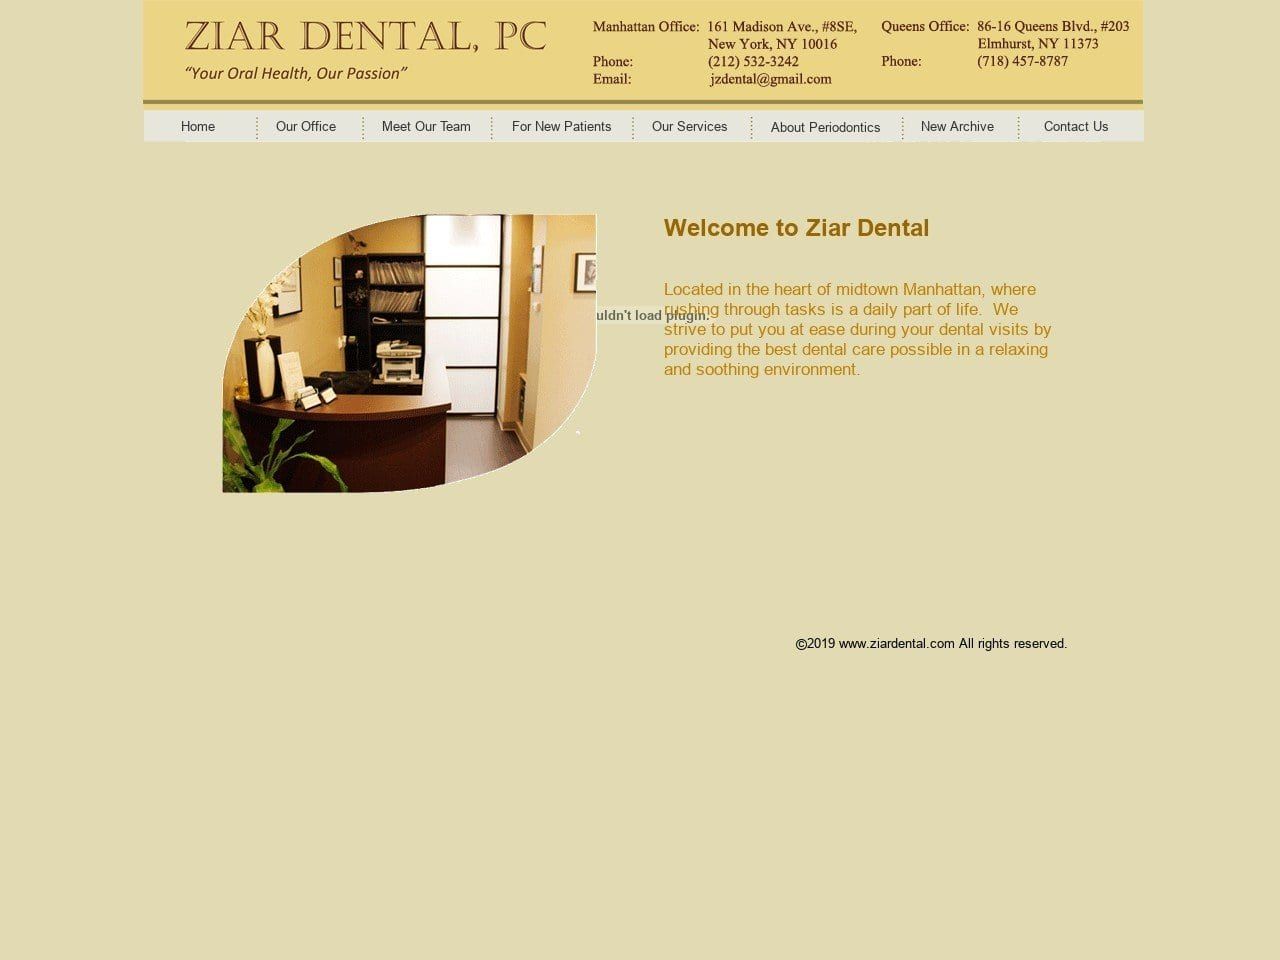 Ziar Dental PC Website Screenshot from ziardental.com